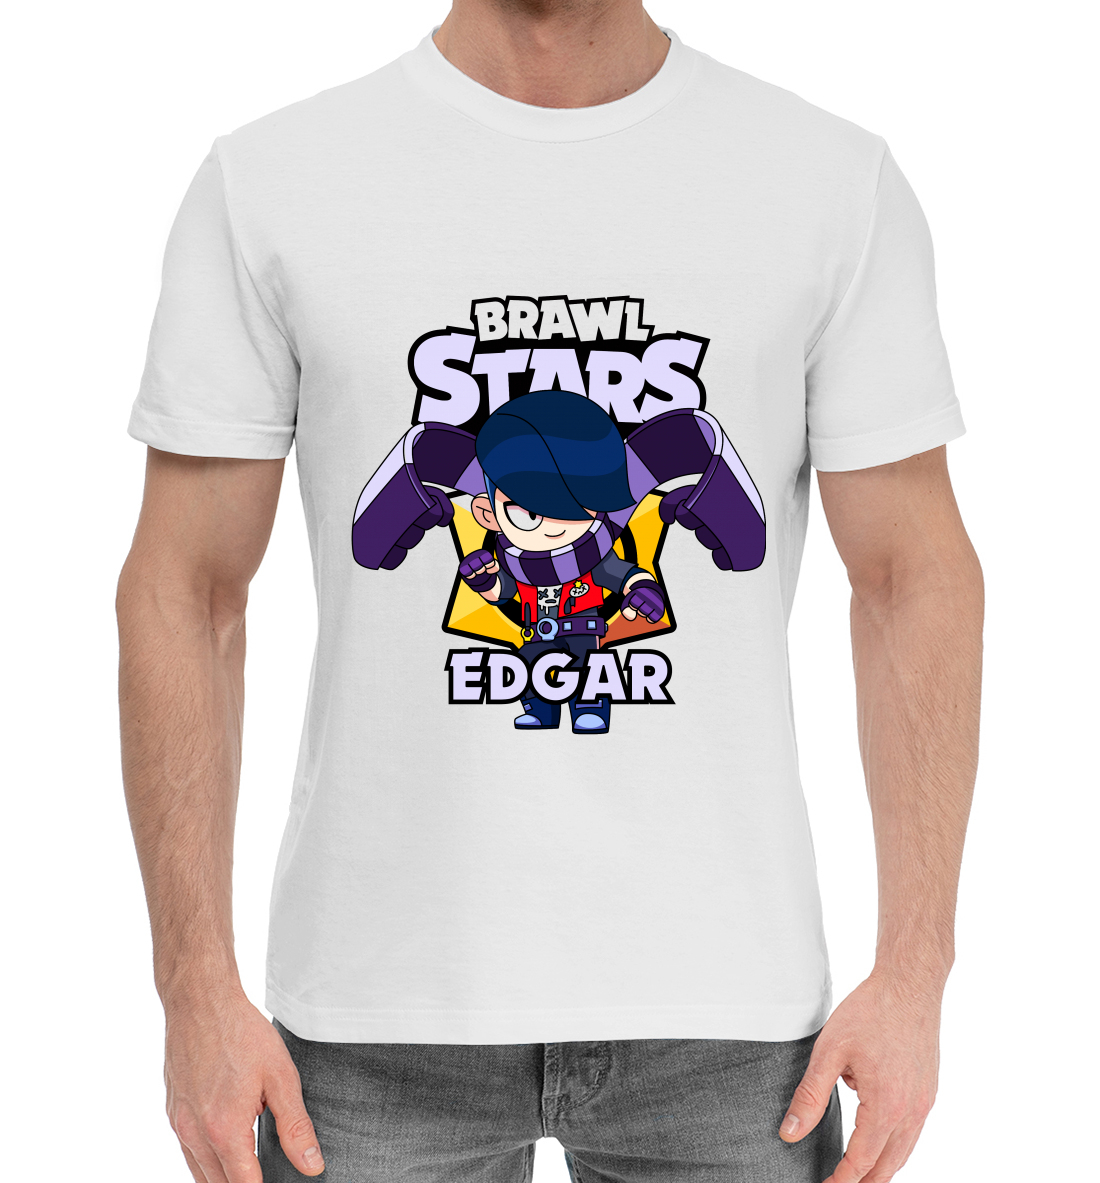 Мужская Хлопковая футболка с принтом Brawl Stars, Edgar, артикул CLH-264605-hfu-2mp